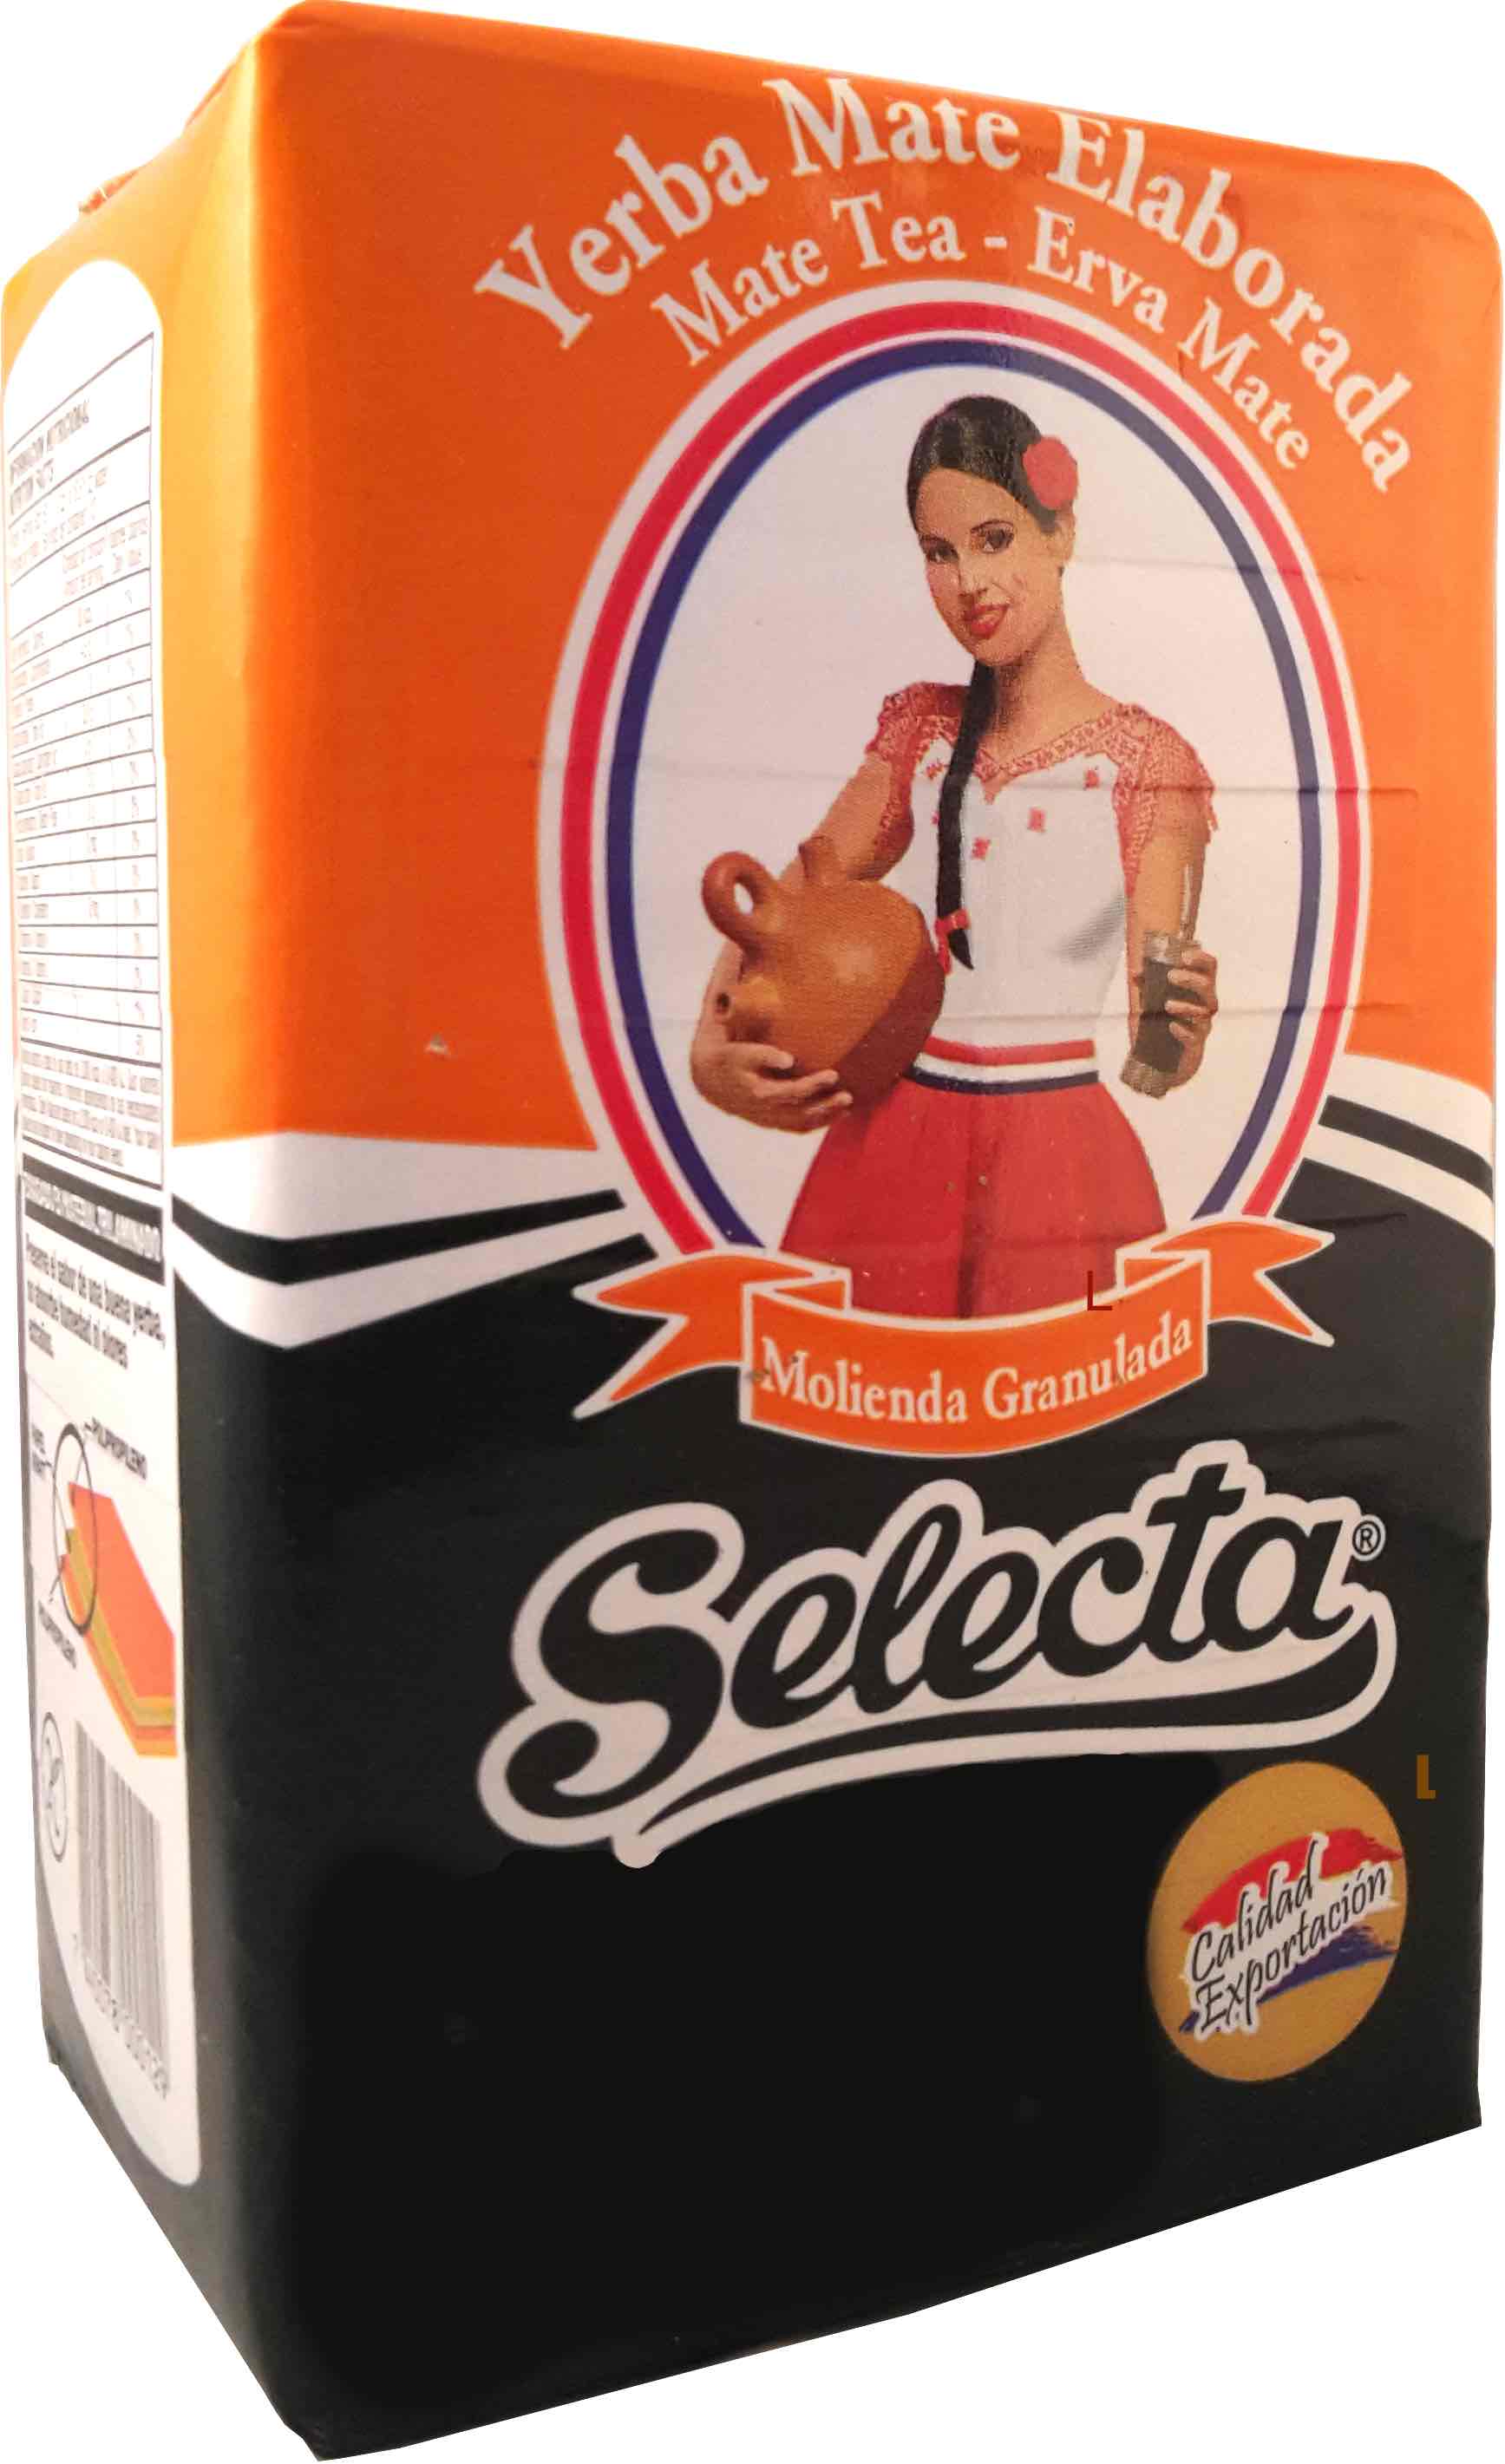 Selecta - Yerba mate Tee aus Paraguay - 500g